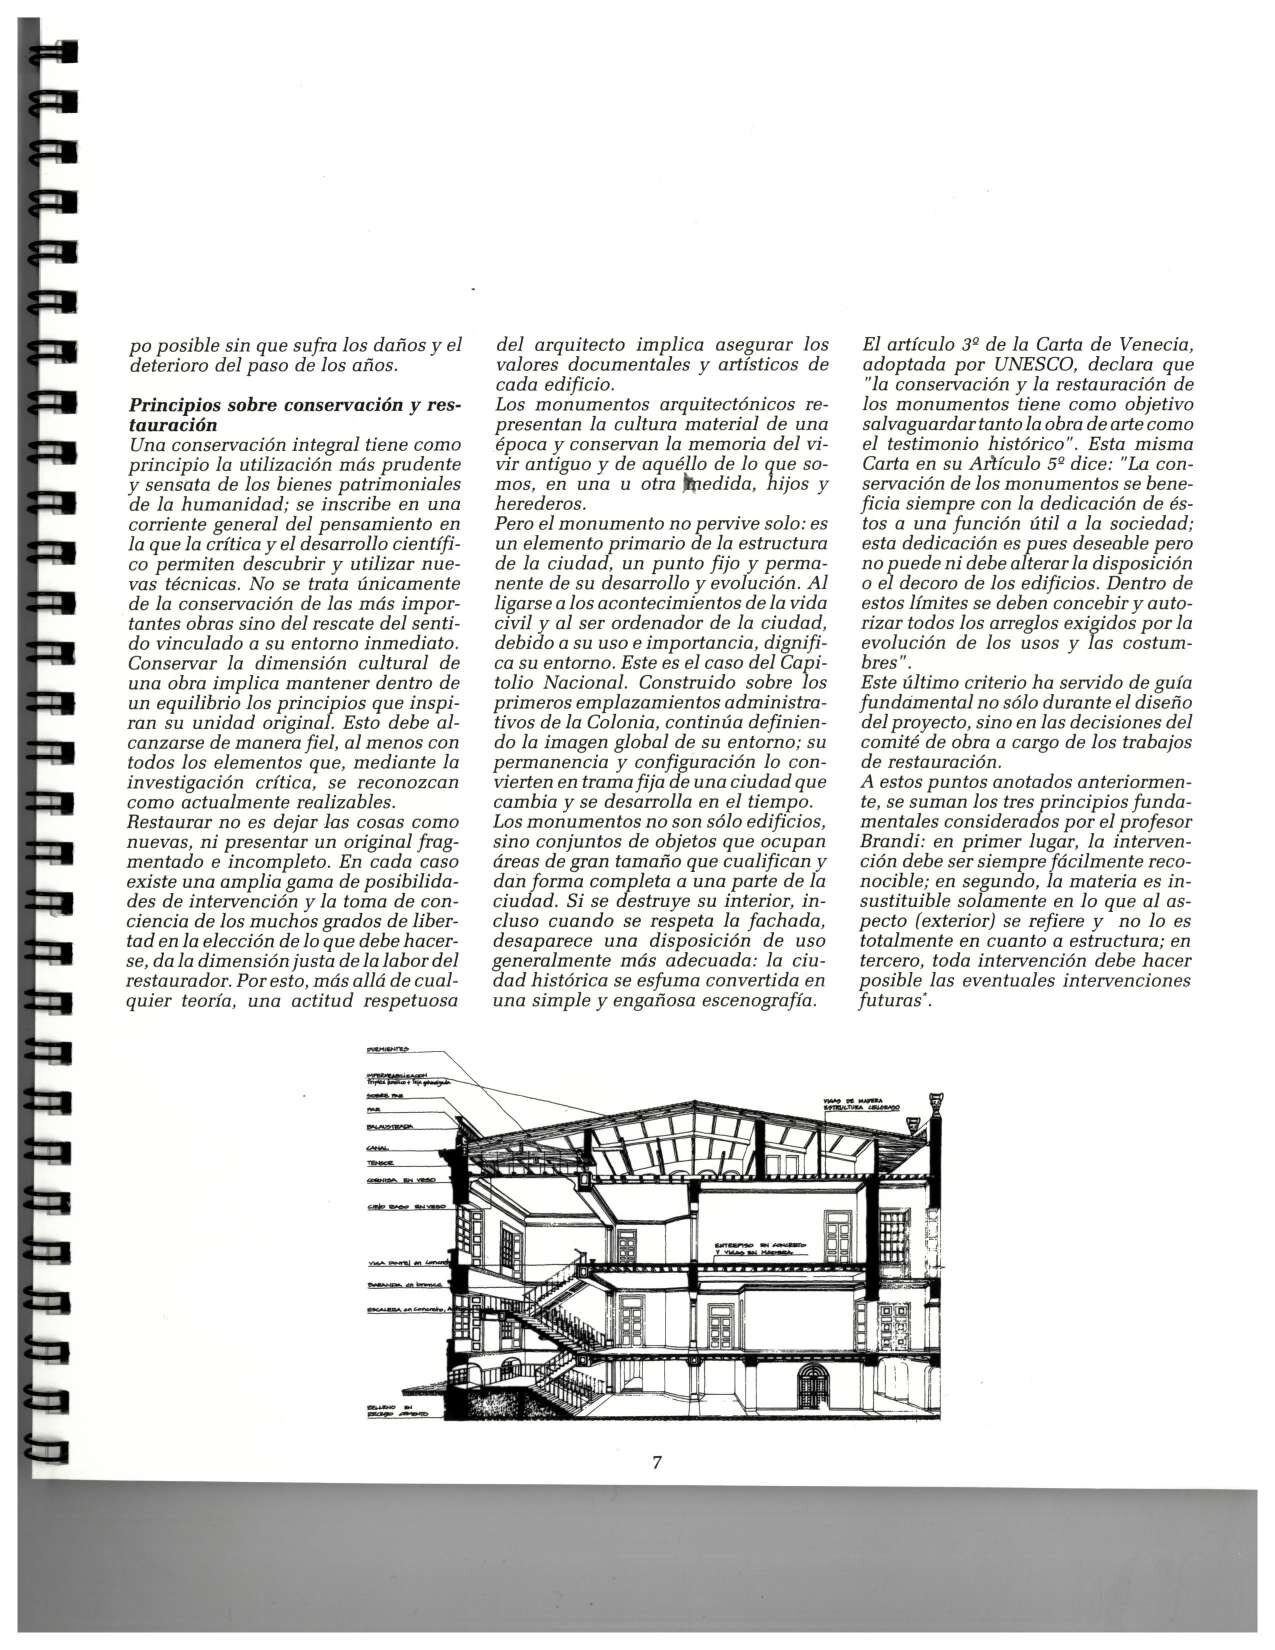 1995_Obra Contexto Urbano_Revista PROA_compressed_page-0007.jpg